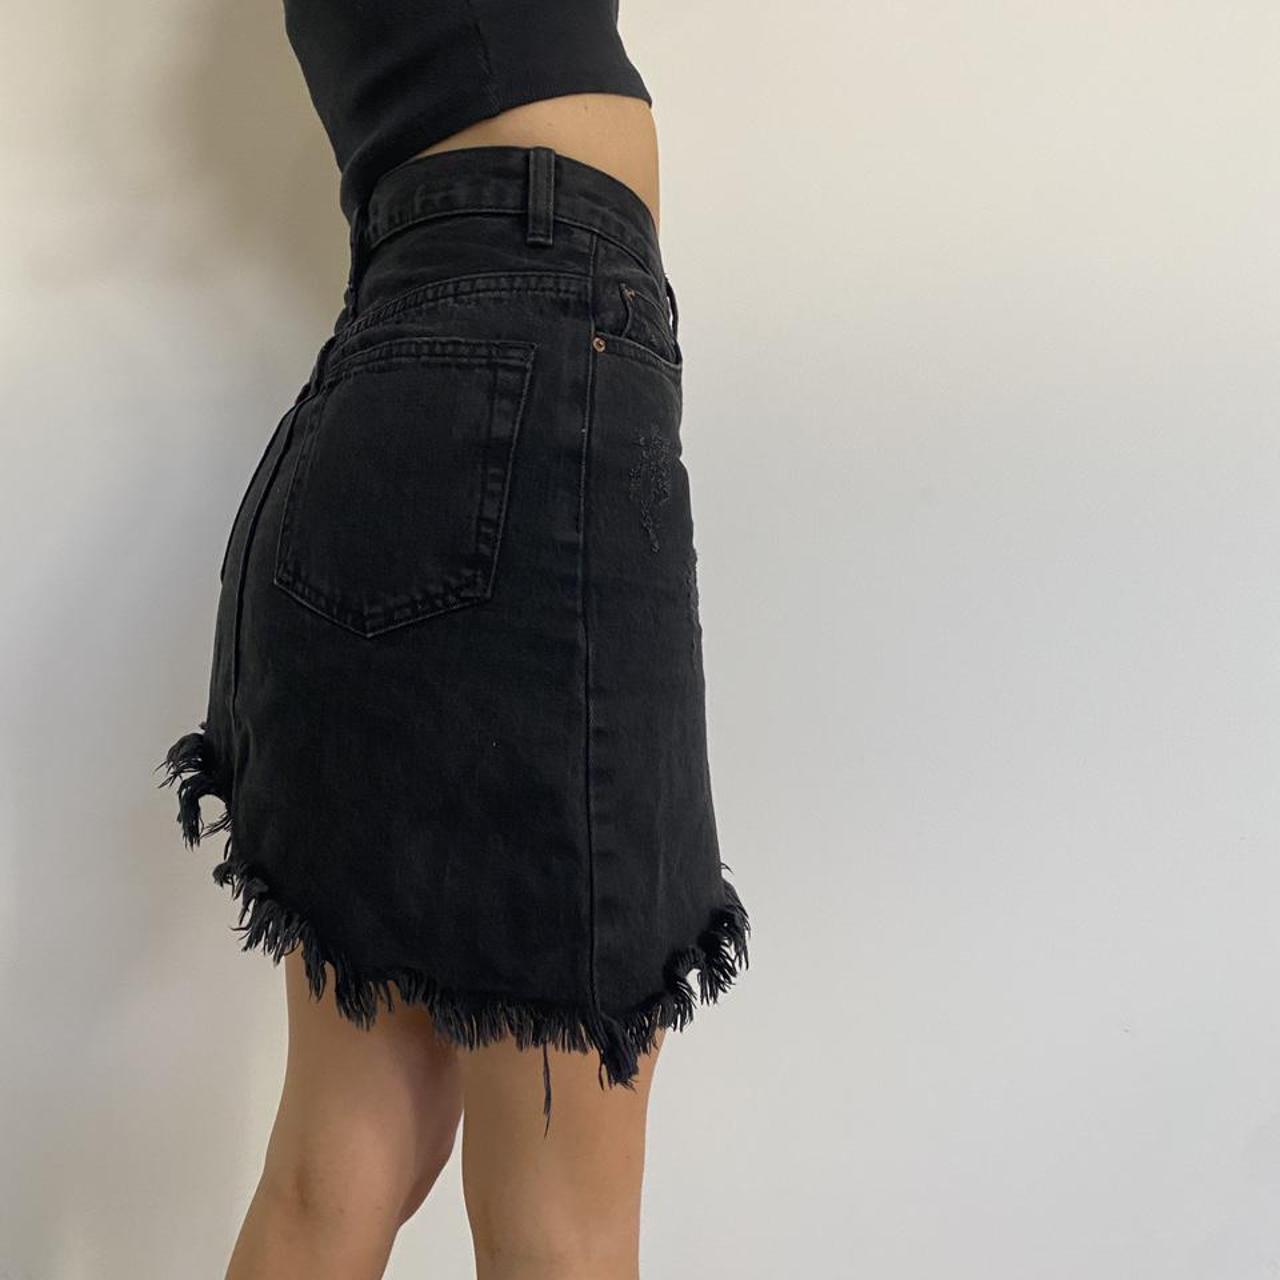 Asymmetric denim skirt. Black and high-waisted... - Depop